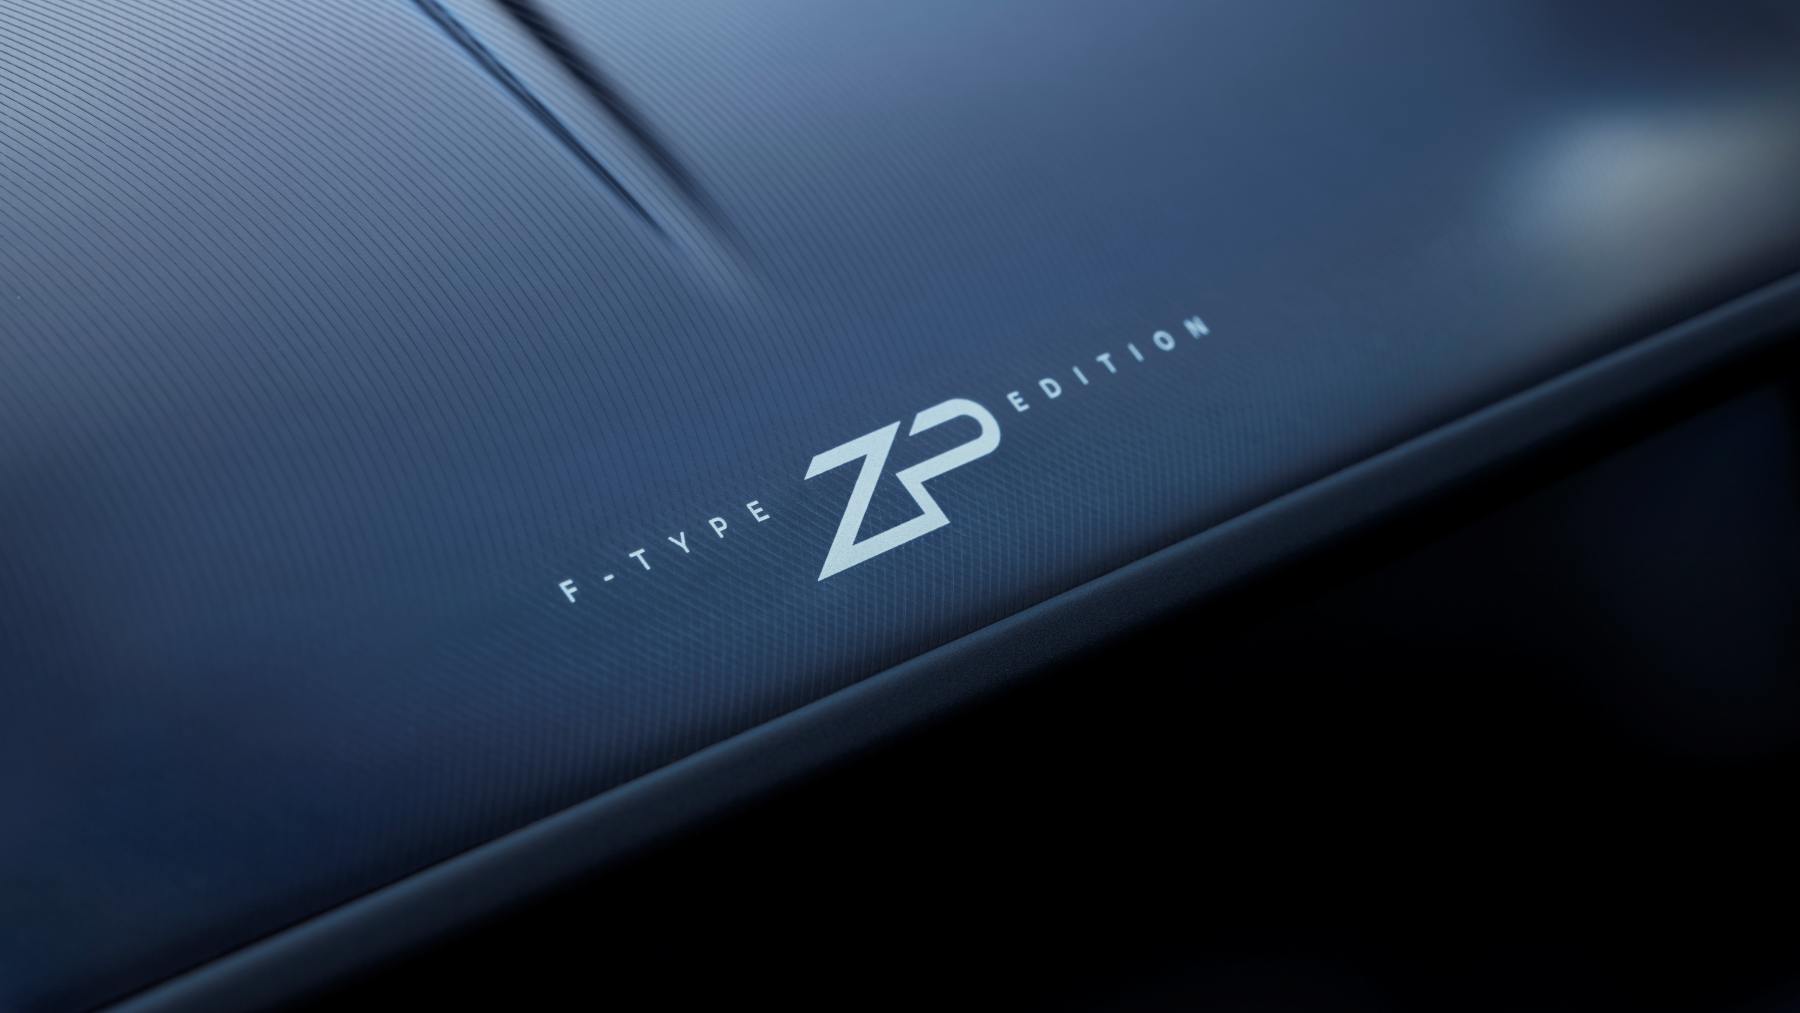 Jaguar F-TYPE 24MY ZP Edition interior logo 2